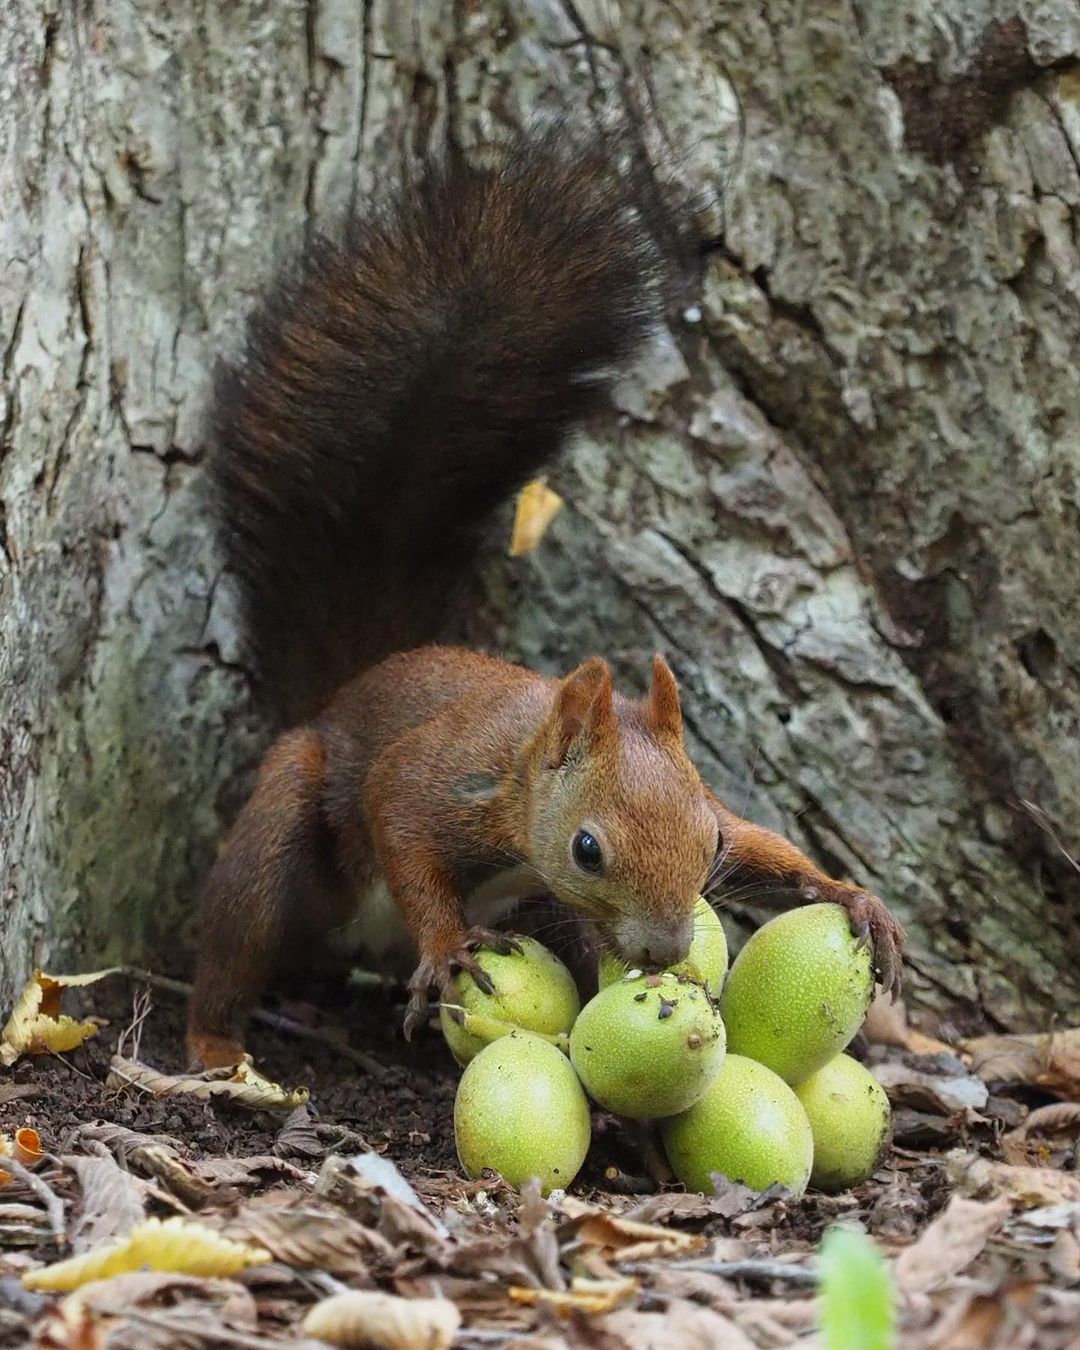 Hokkaido squirrel monopolizing walnuts (Sapporo)